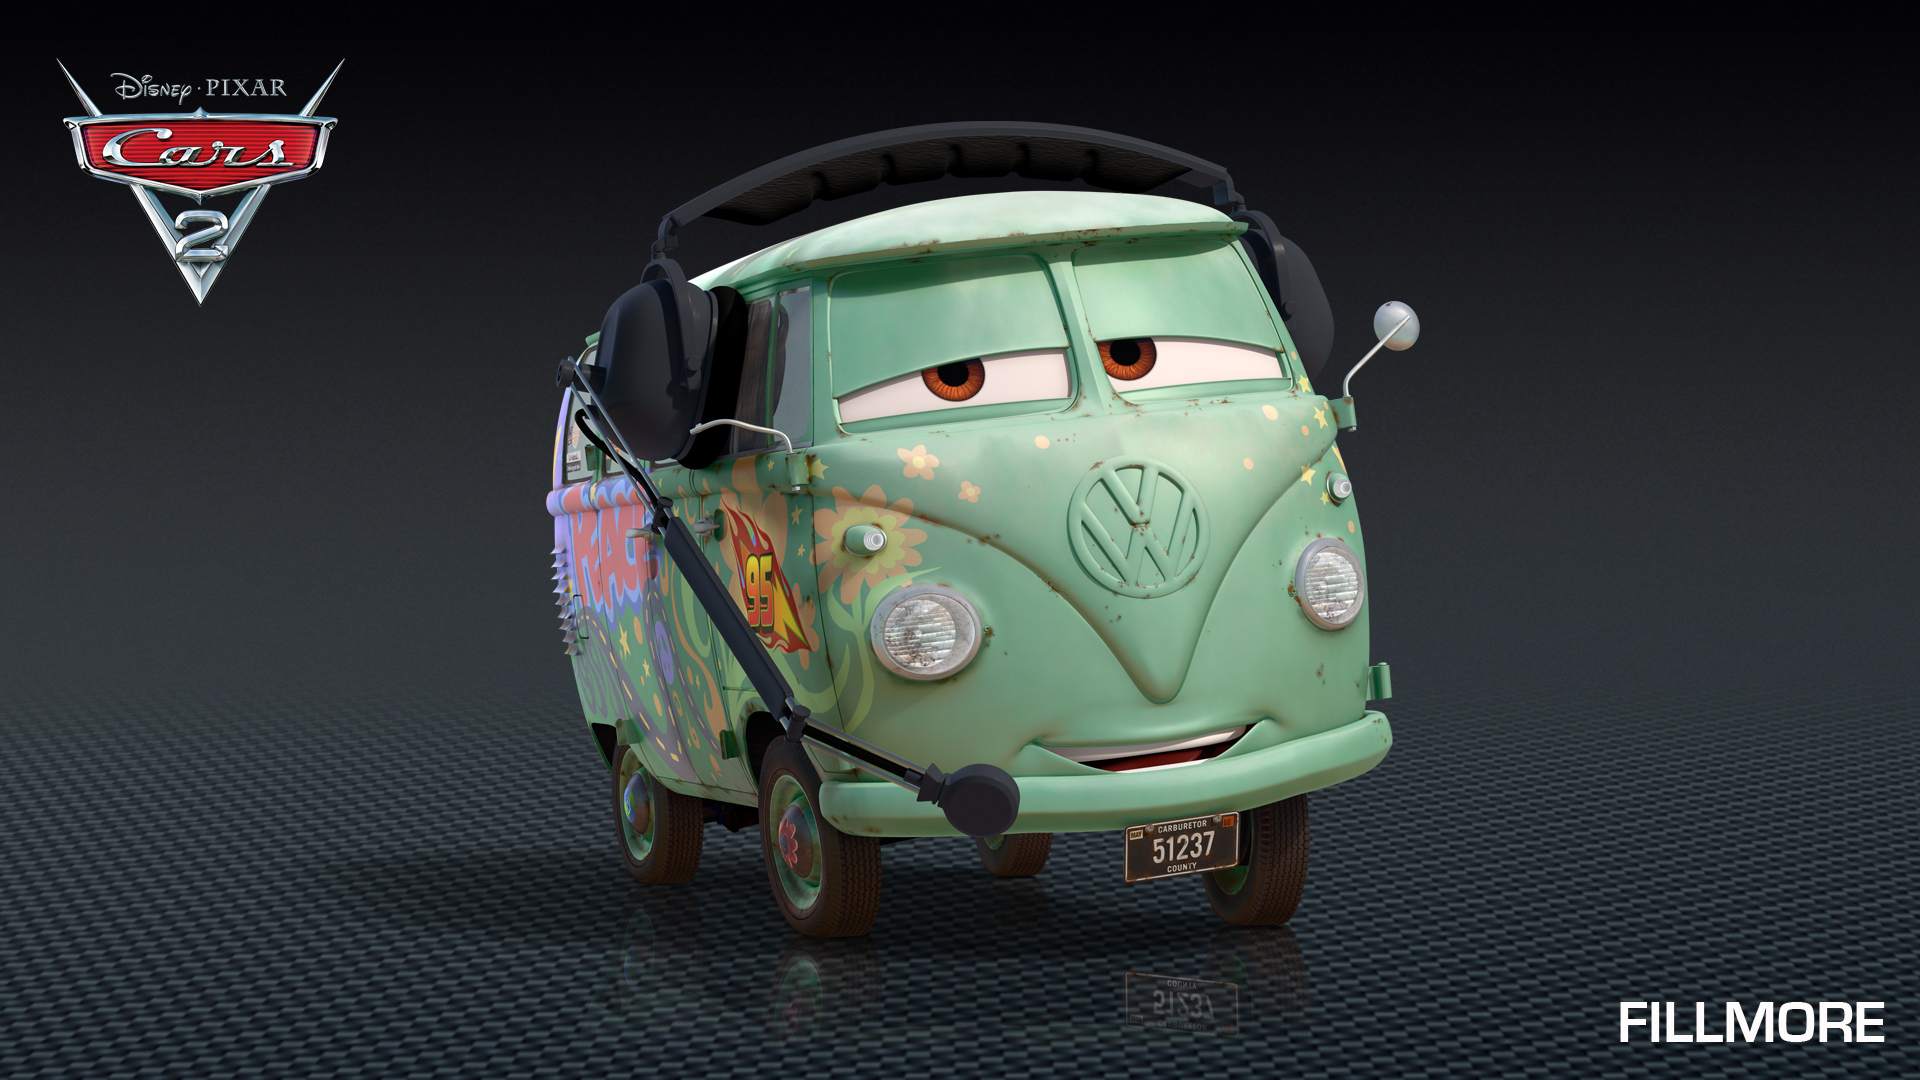 Cars 2 Characters Characters In Disney Pixar Cars 2